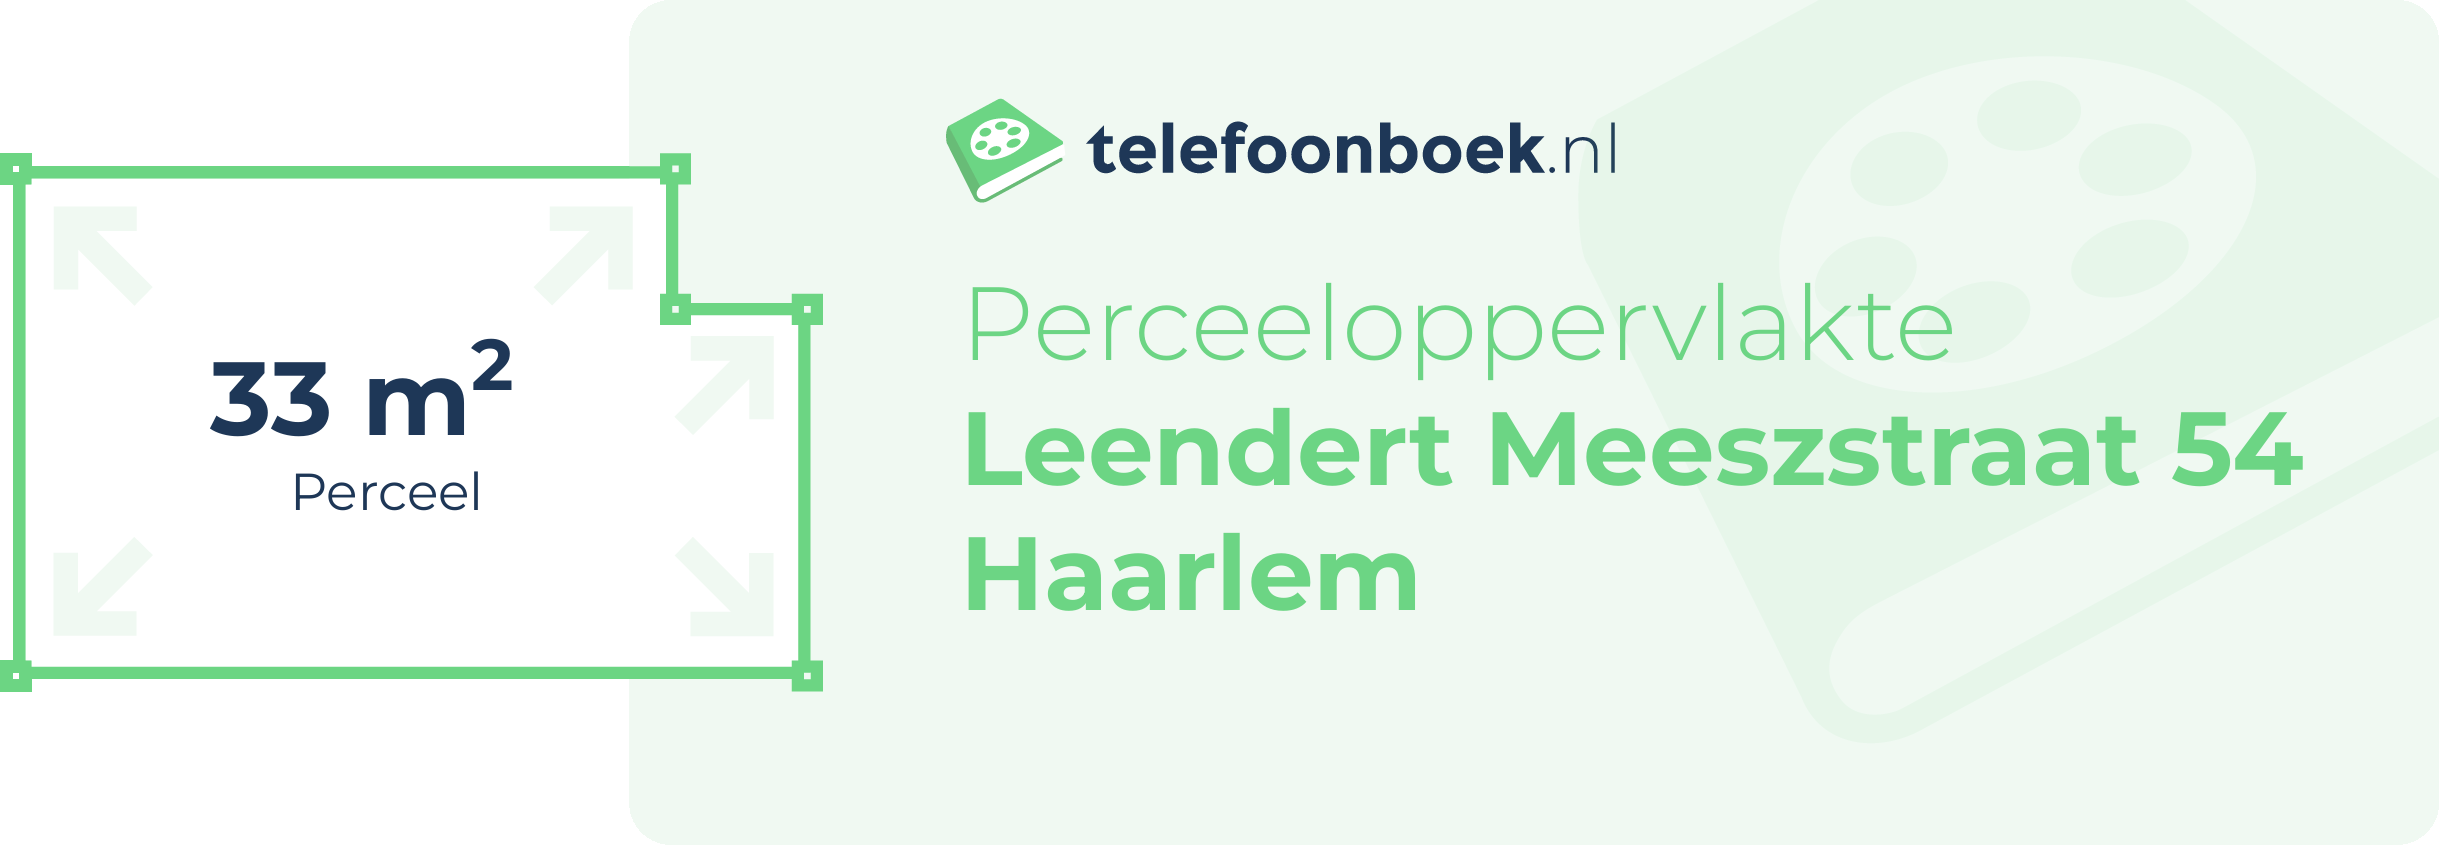 Perceeloppervlakte Leendert Meeszstraat 54 Haarlem